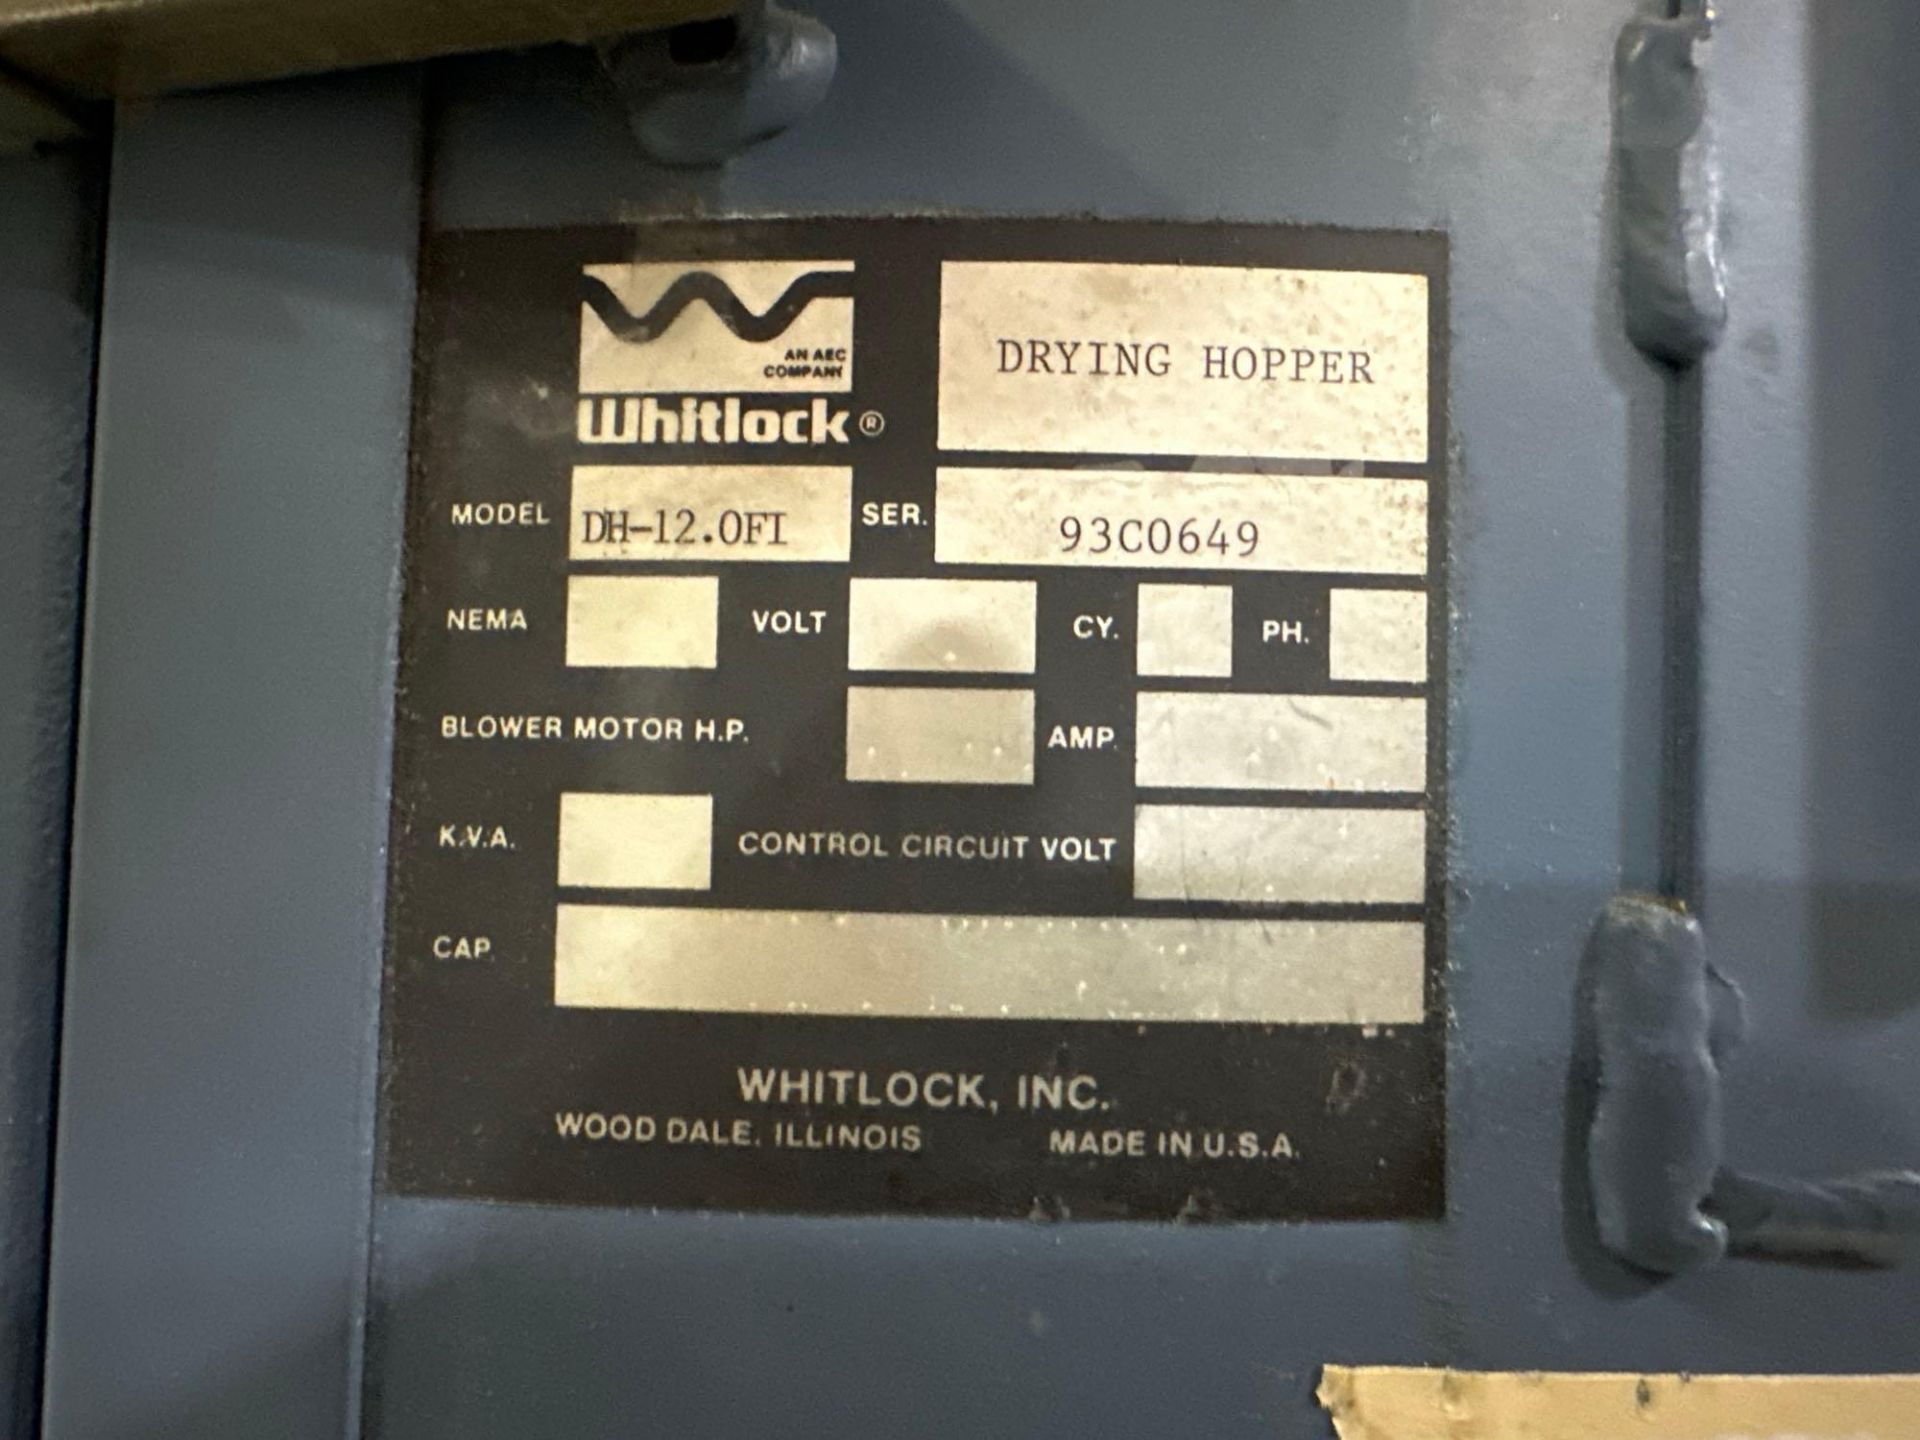 AEC Whitlock DH-12.OFI Drying Hopper, s/n 93c0659 - Image 6 of 6